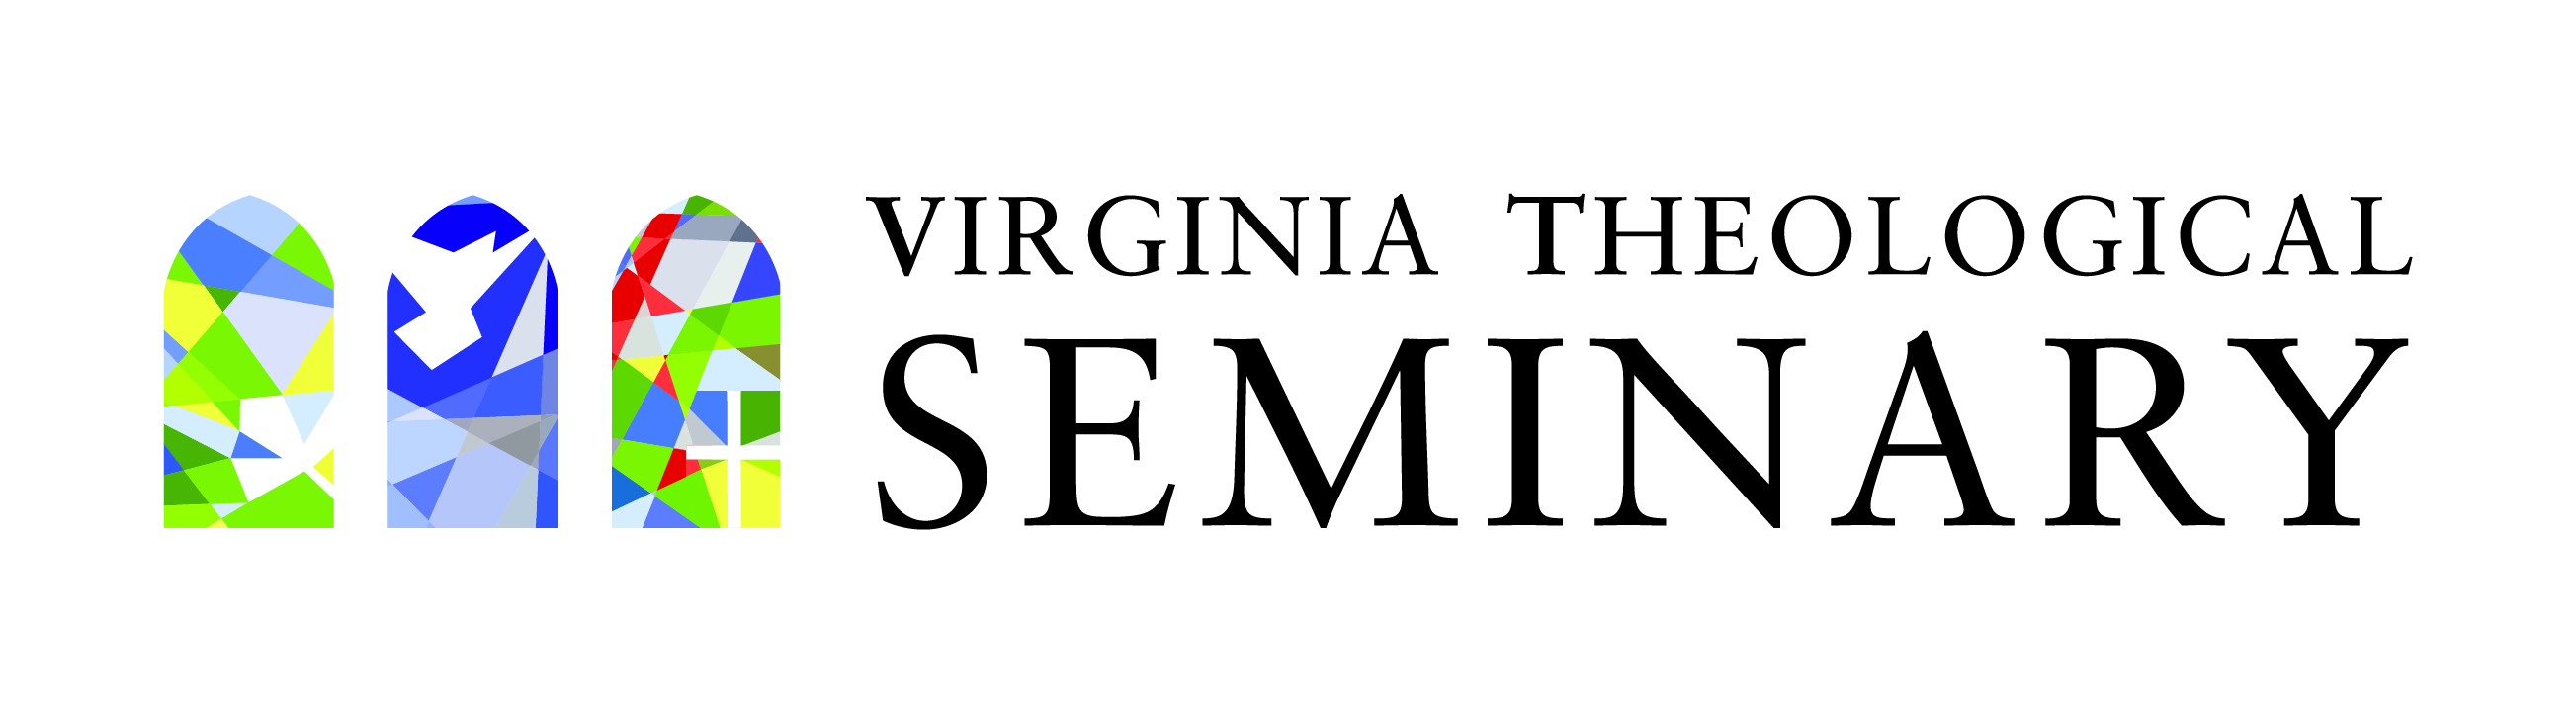 Virginia Theological Seminary